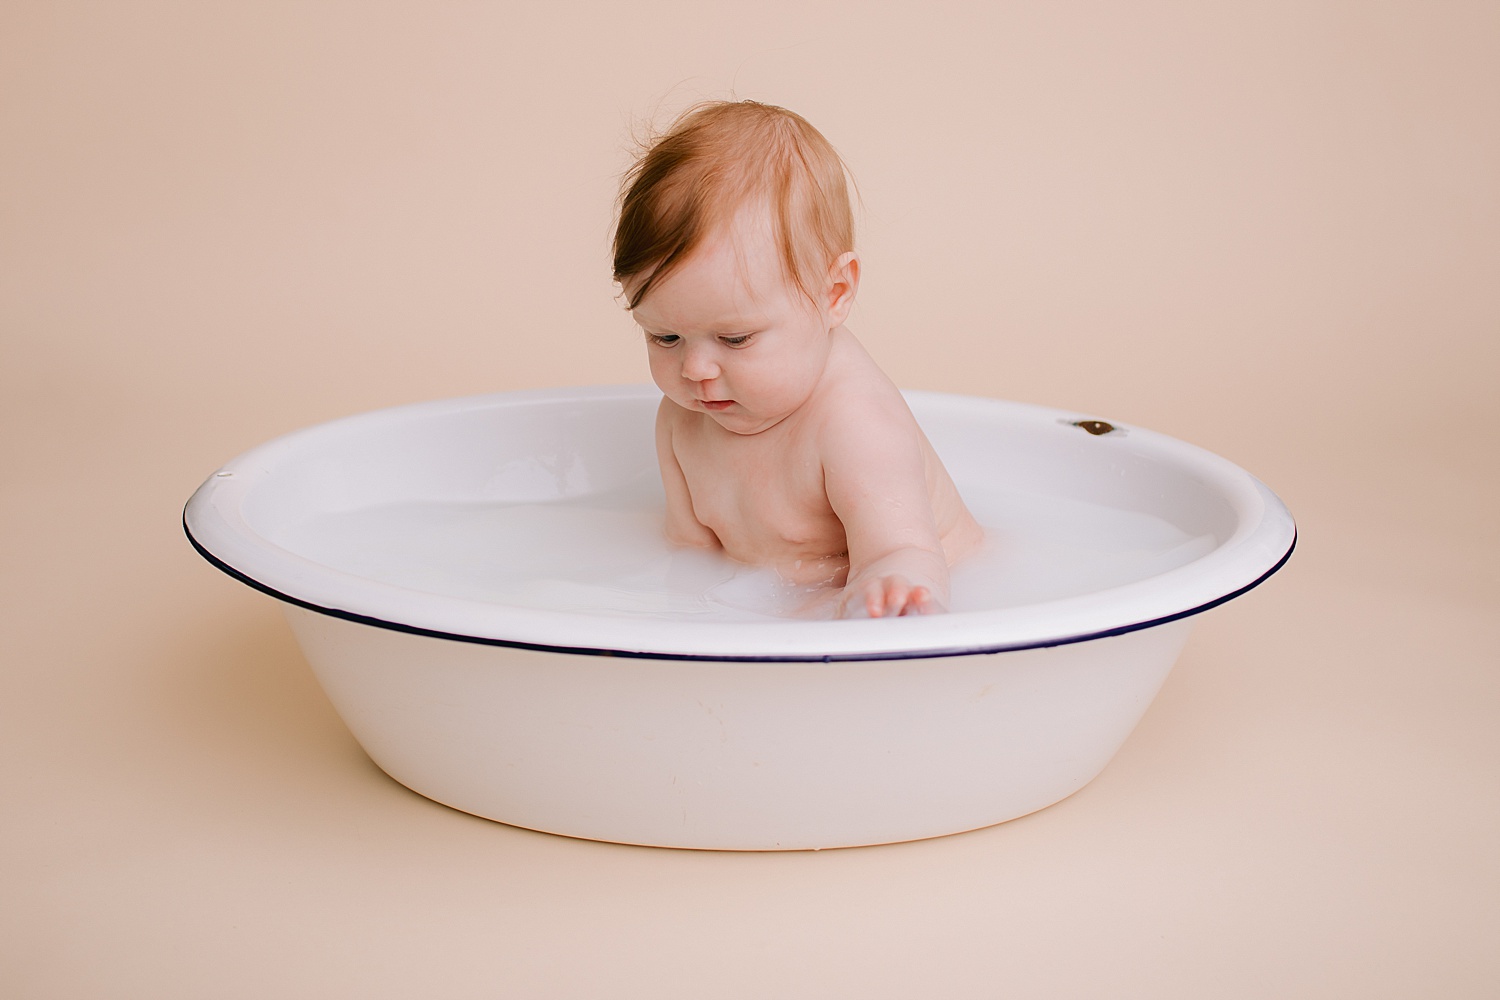 Berks County Pennsylvania children's studio portrait photographer milk bath baby